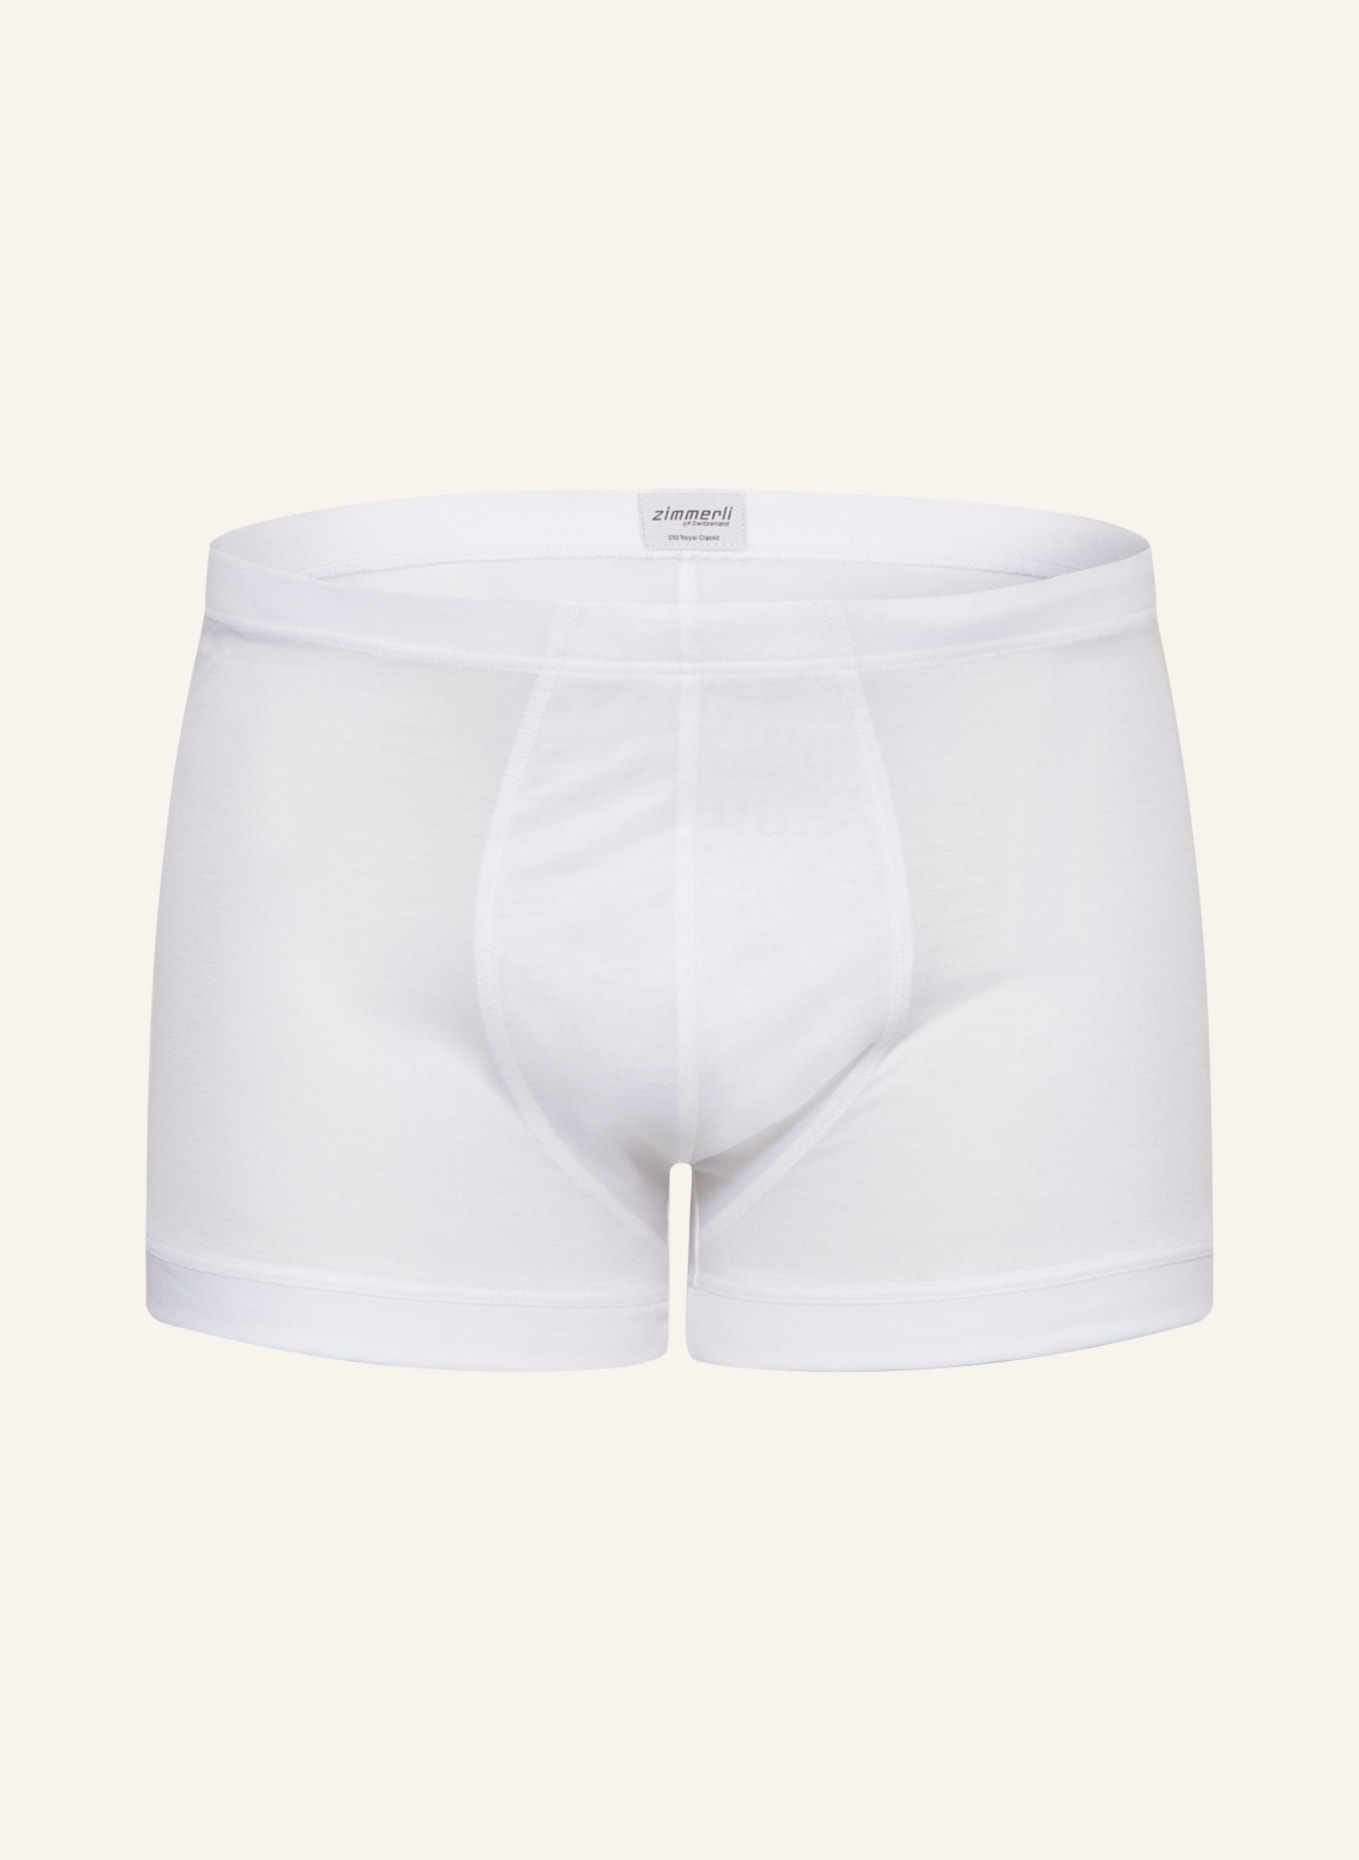 zimmerli Boxer shorts ROYAL CLASSIC, Color: WHITE (Image 1)